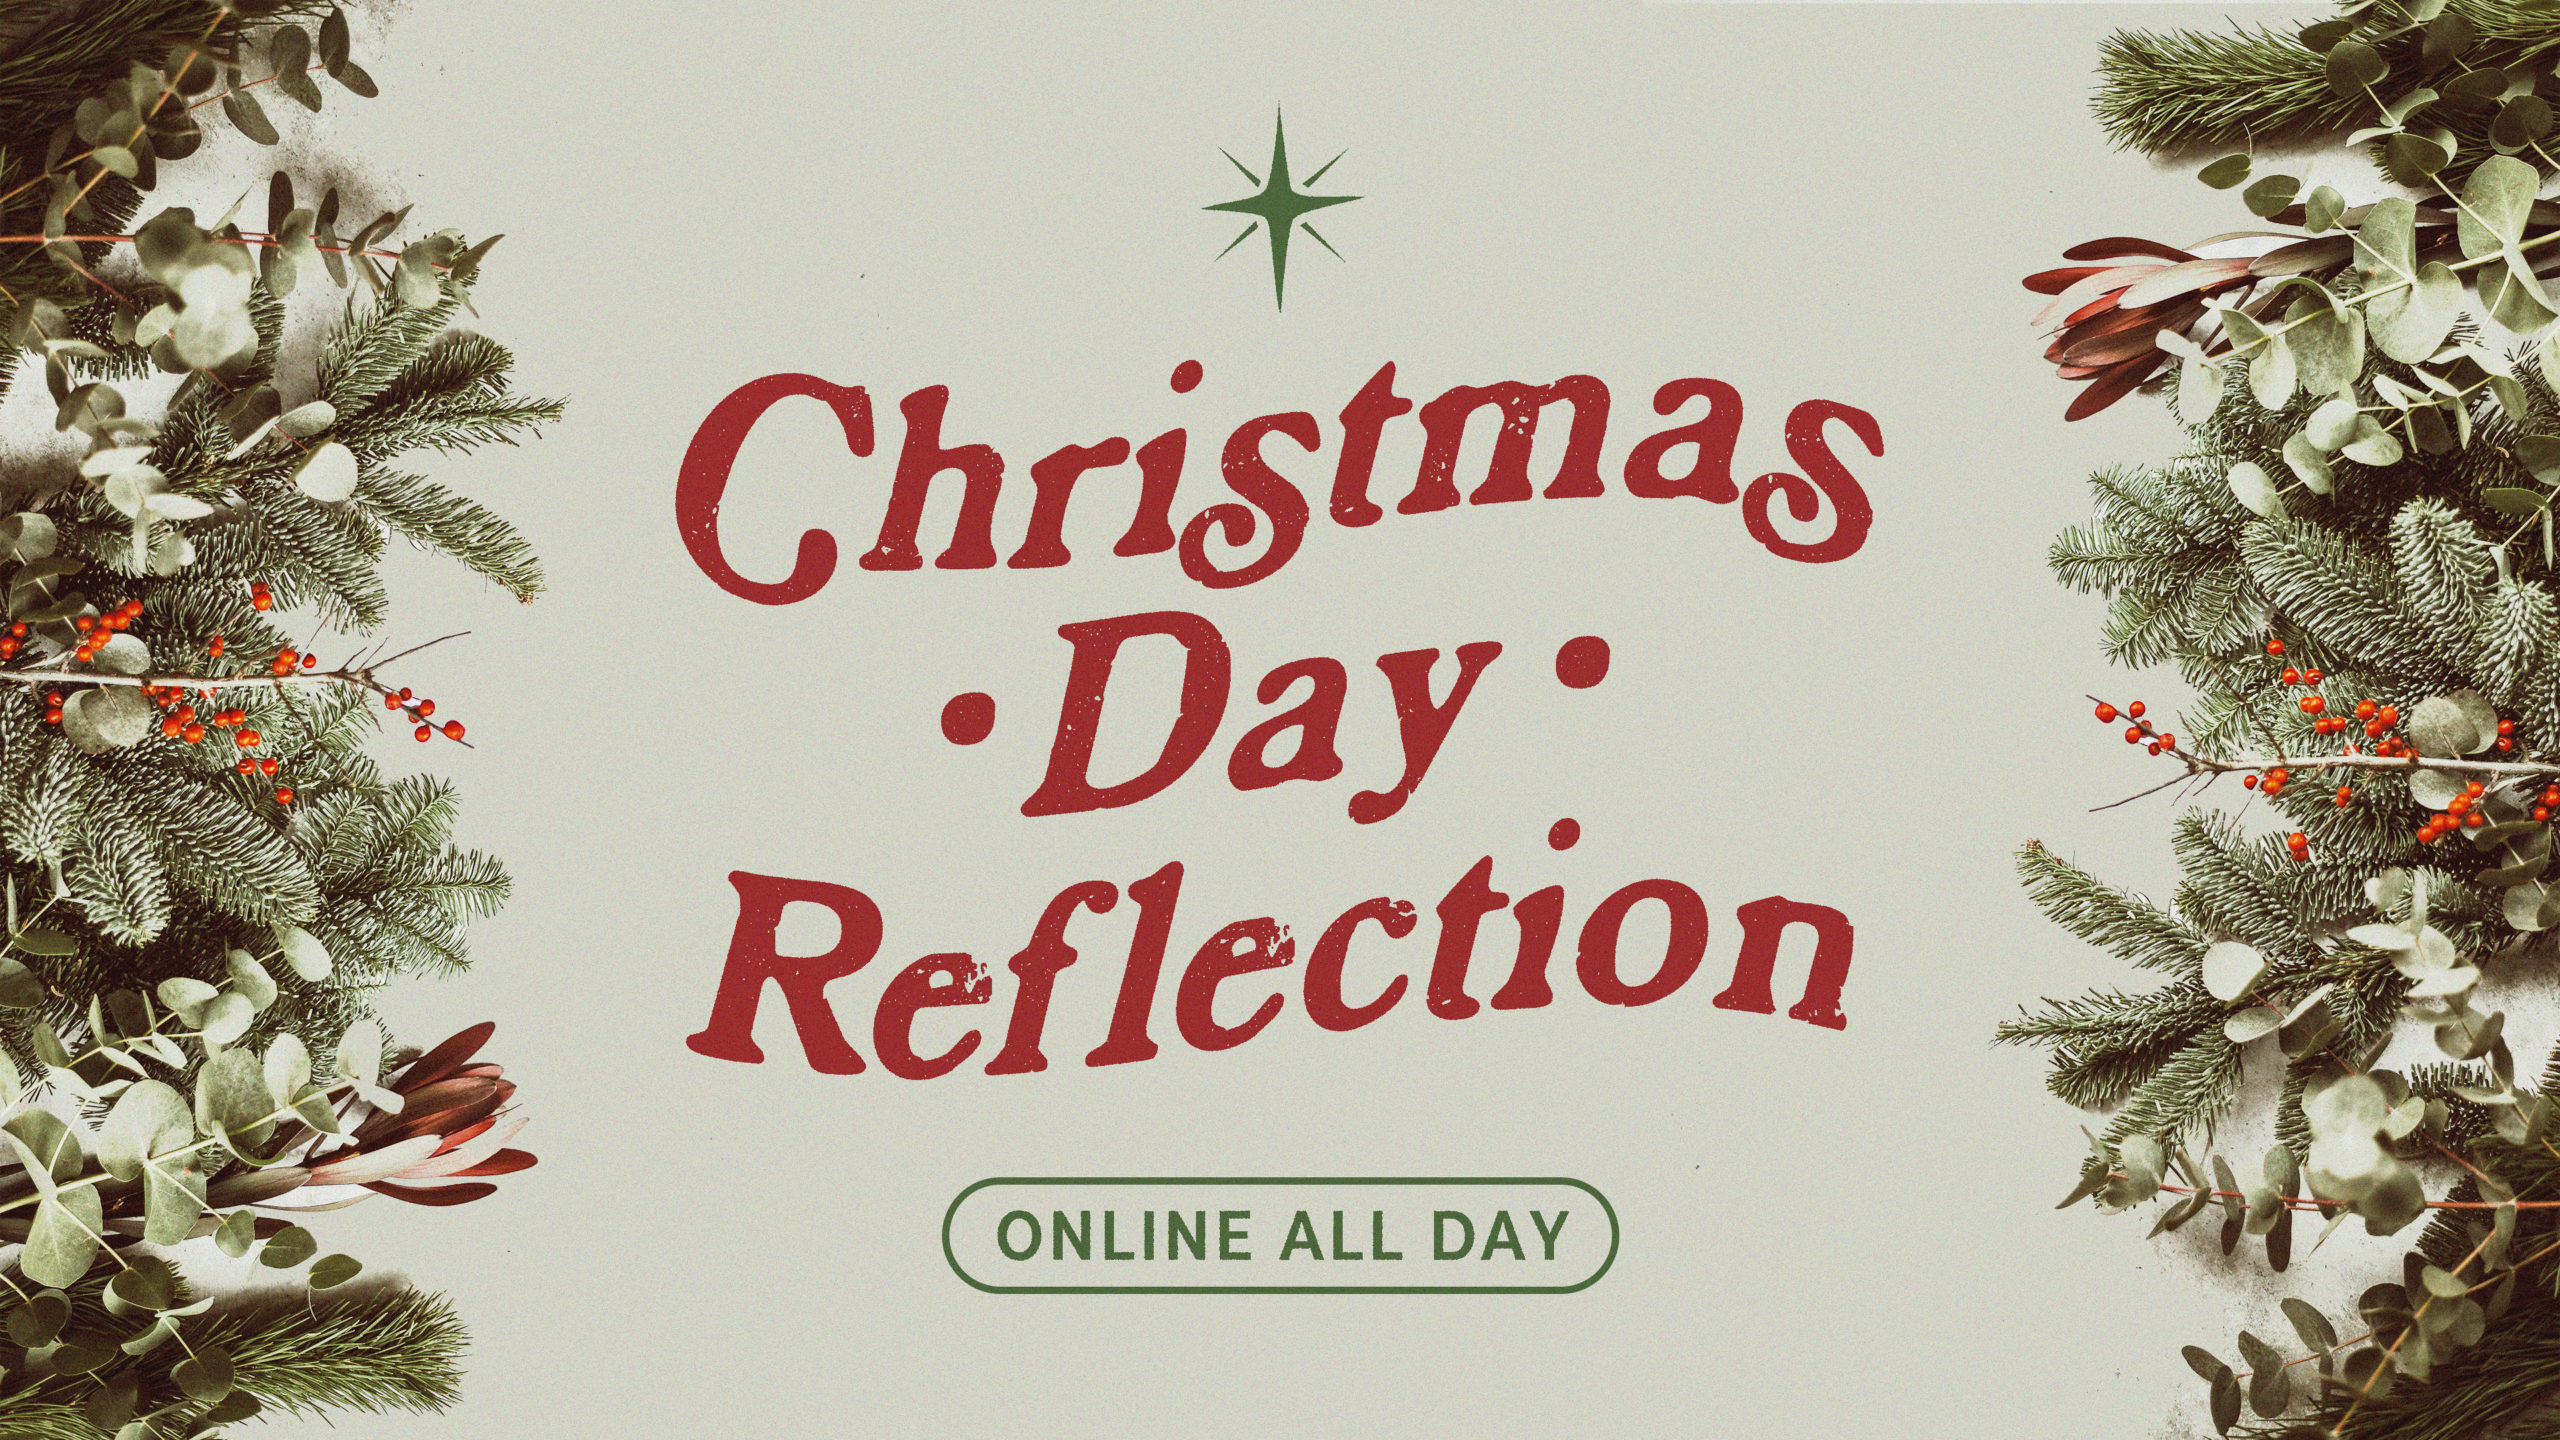 Image: Christmas Day Reflection